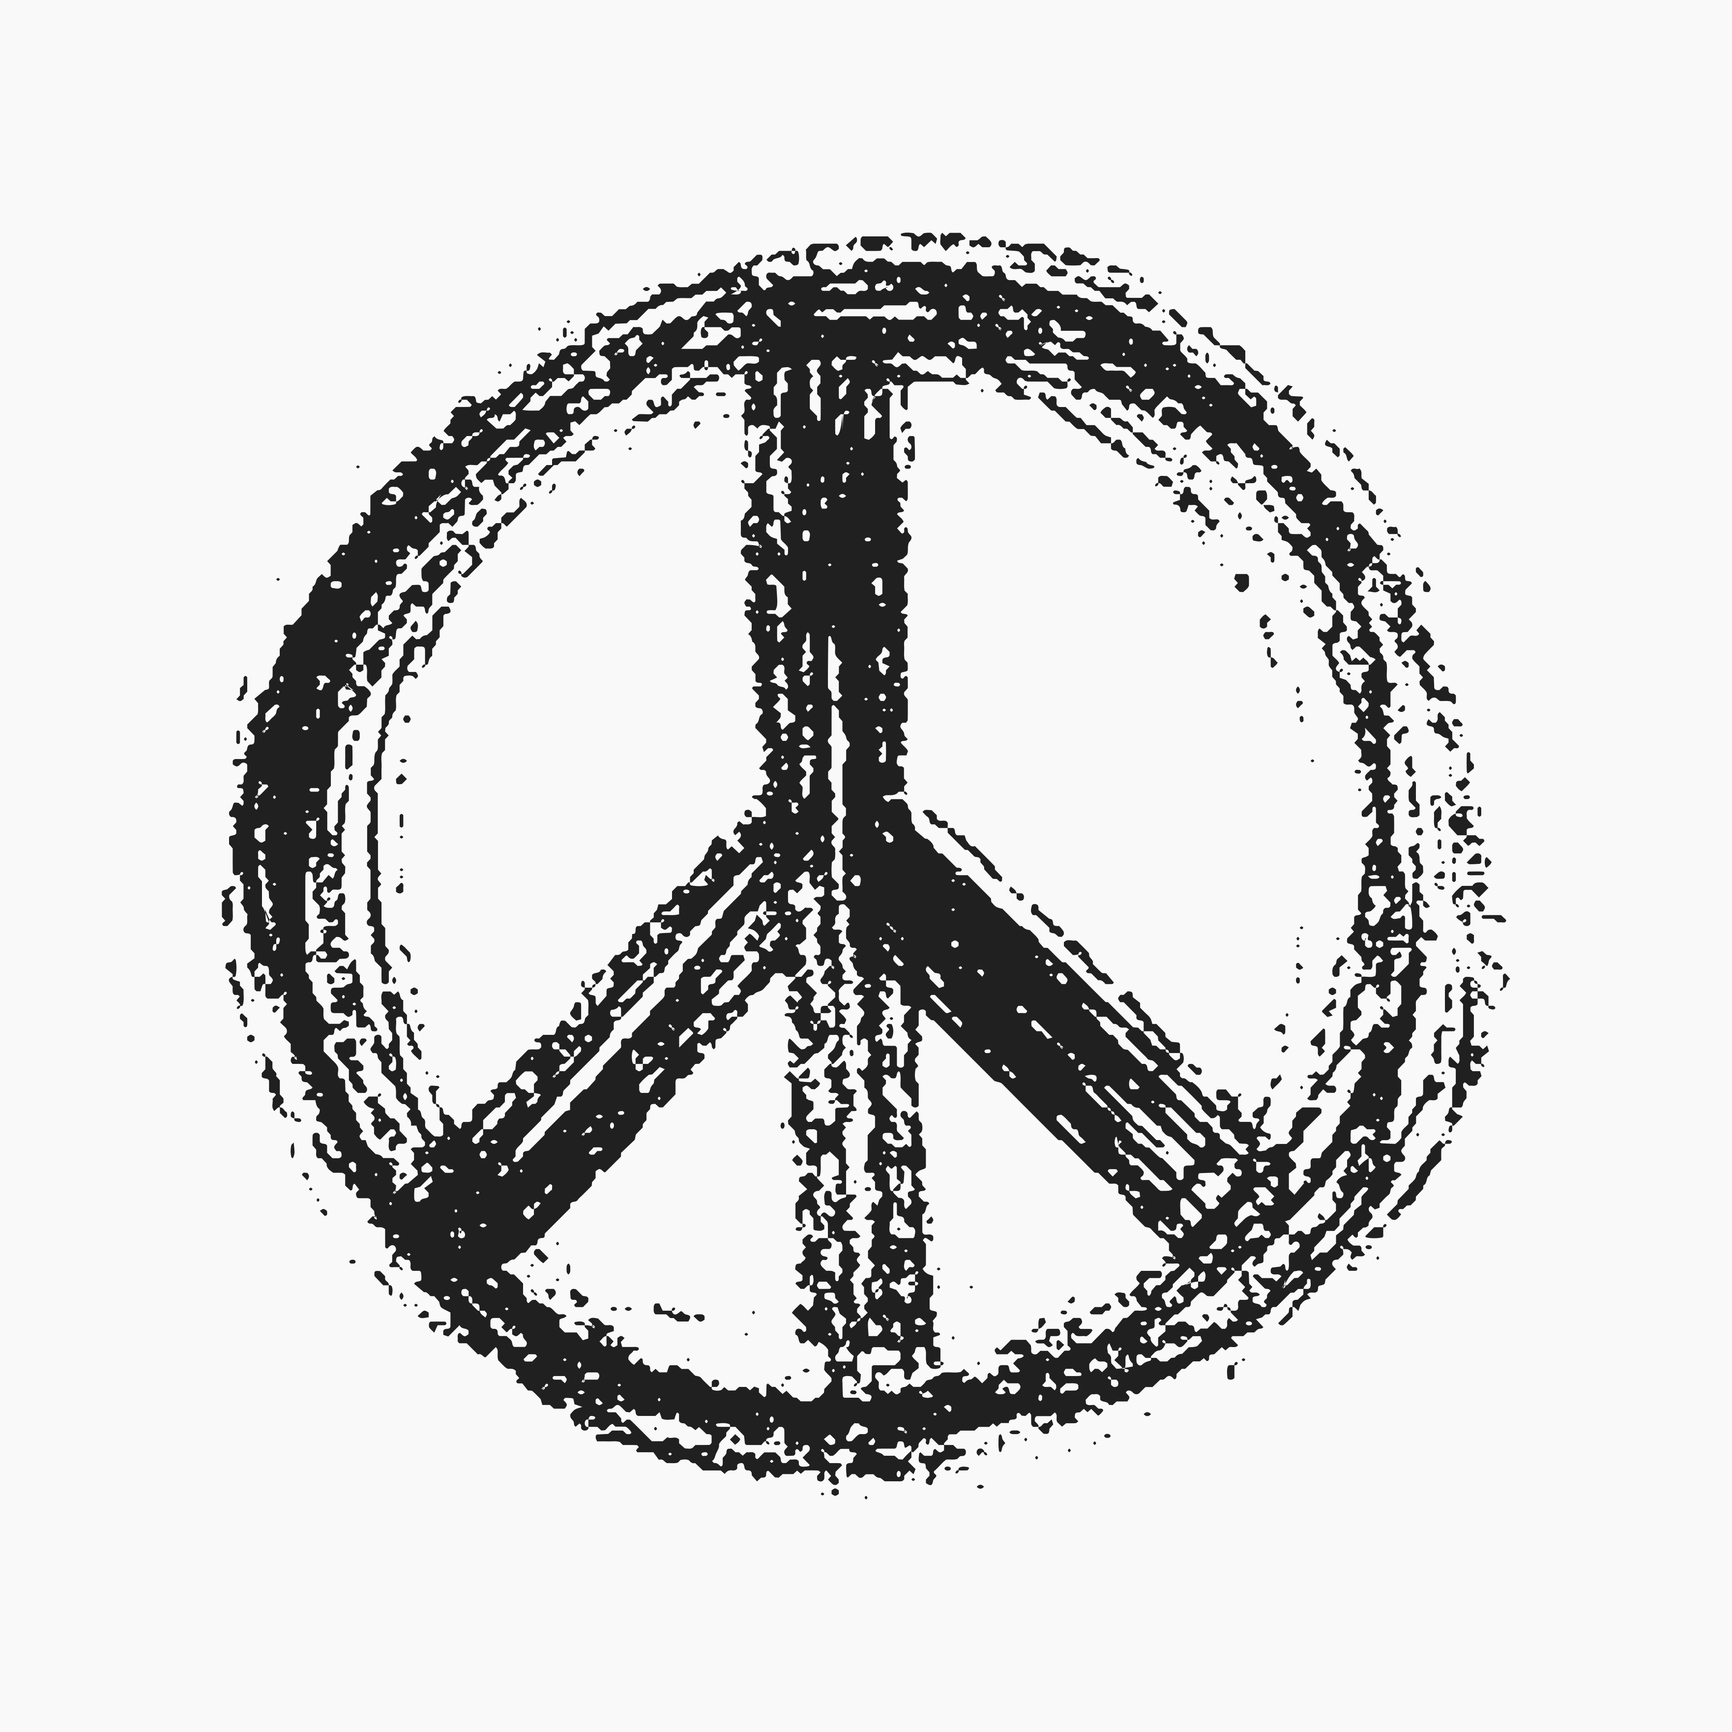 Cool-Peace-sign-tattoo.jpg